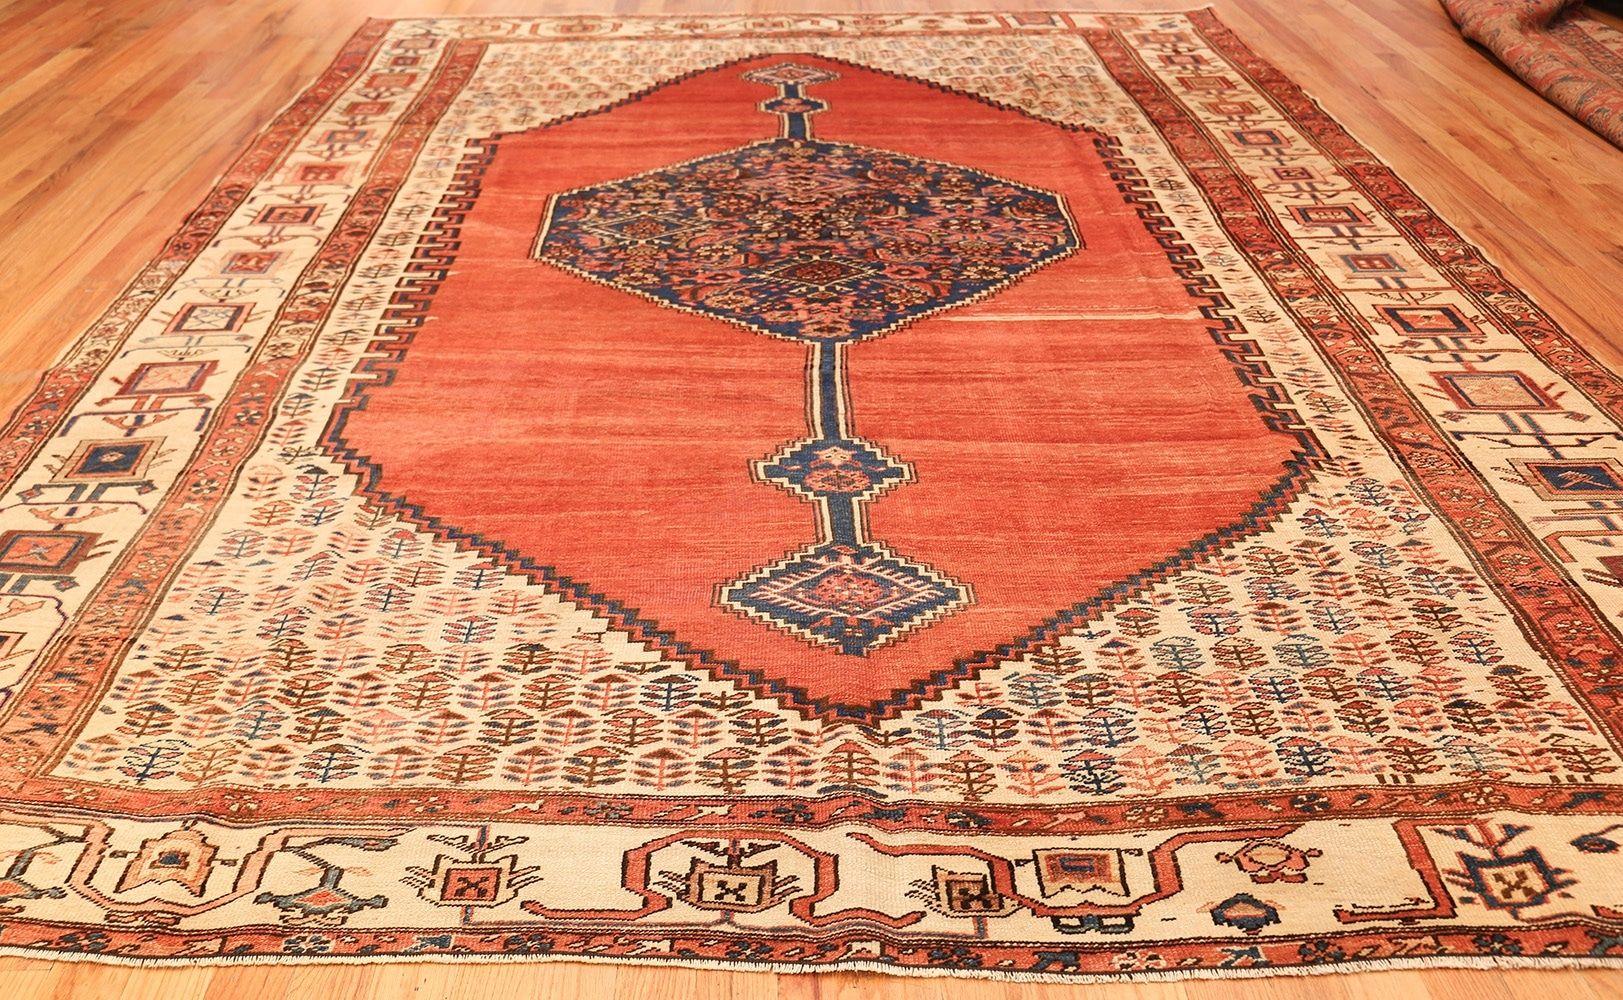 Hand-Knotted Beautiful Room Size Antique Persian Bakshaish Carpet. Size: 9' 5